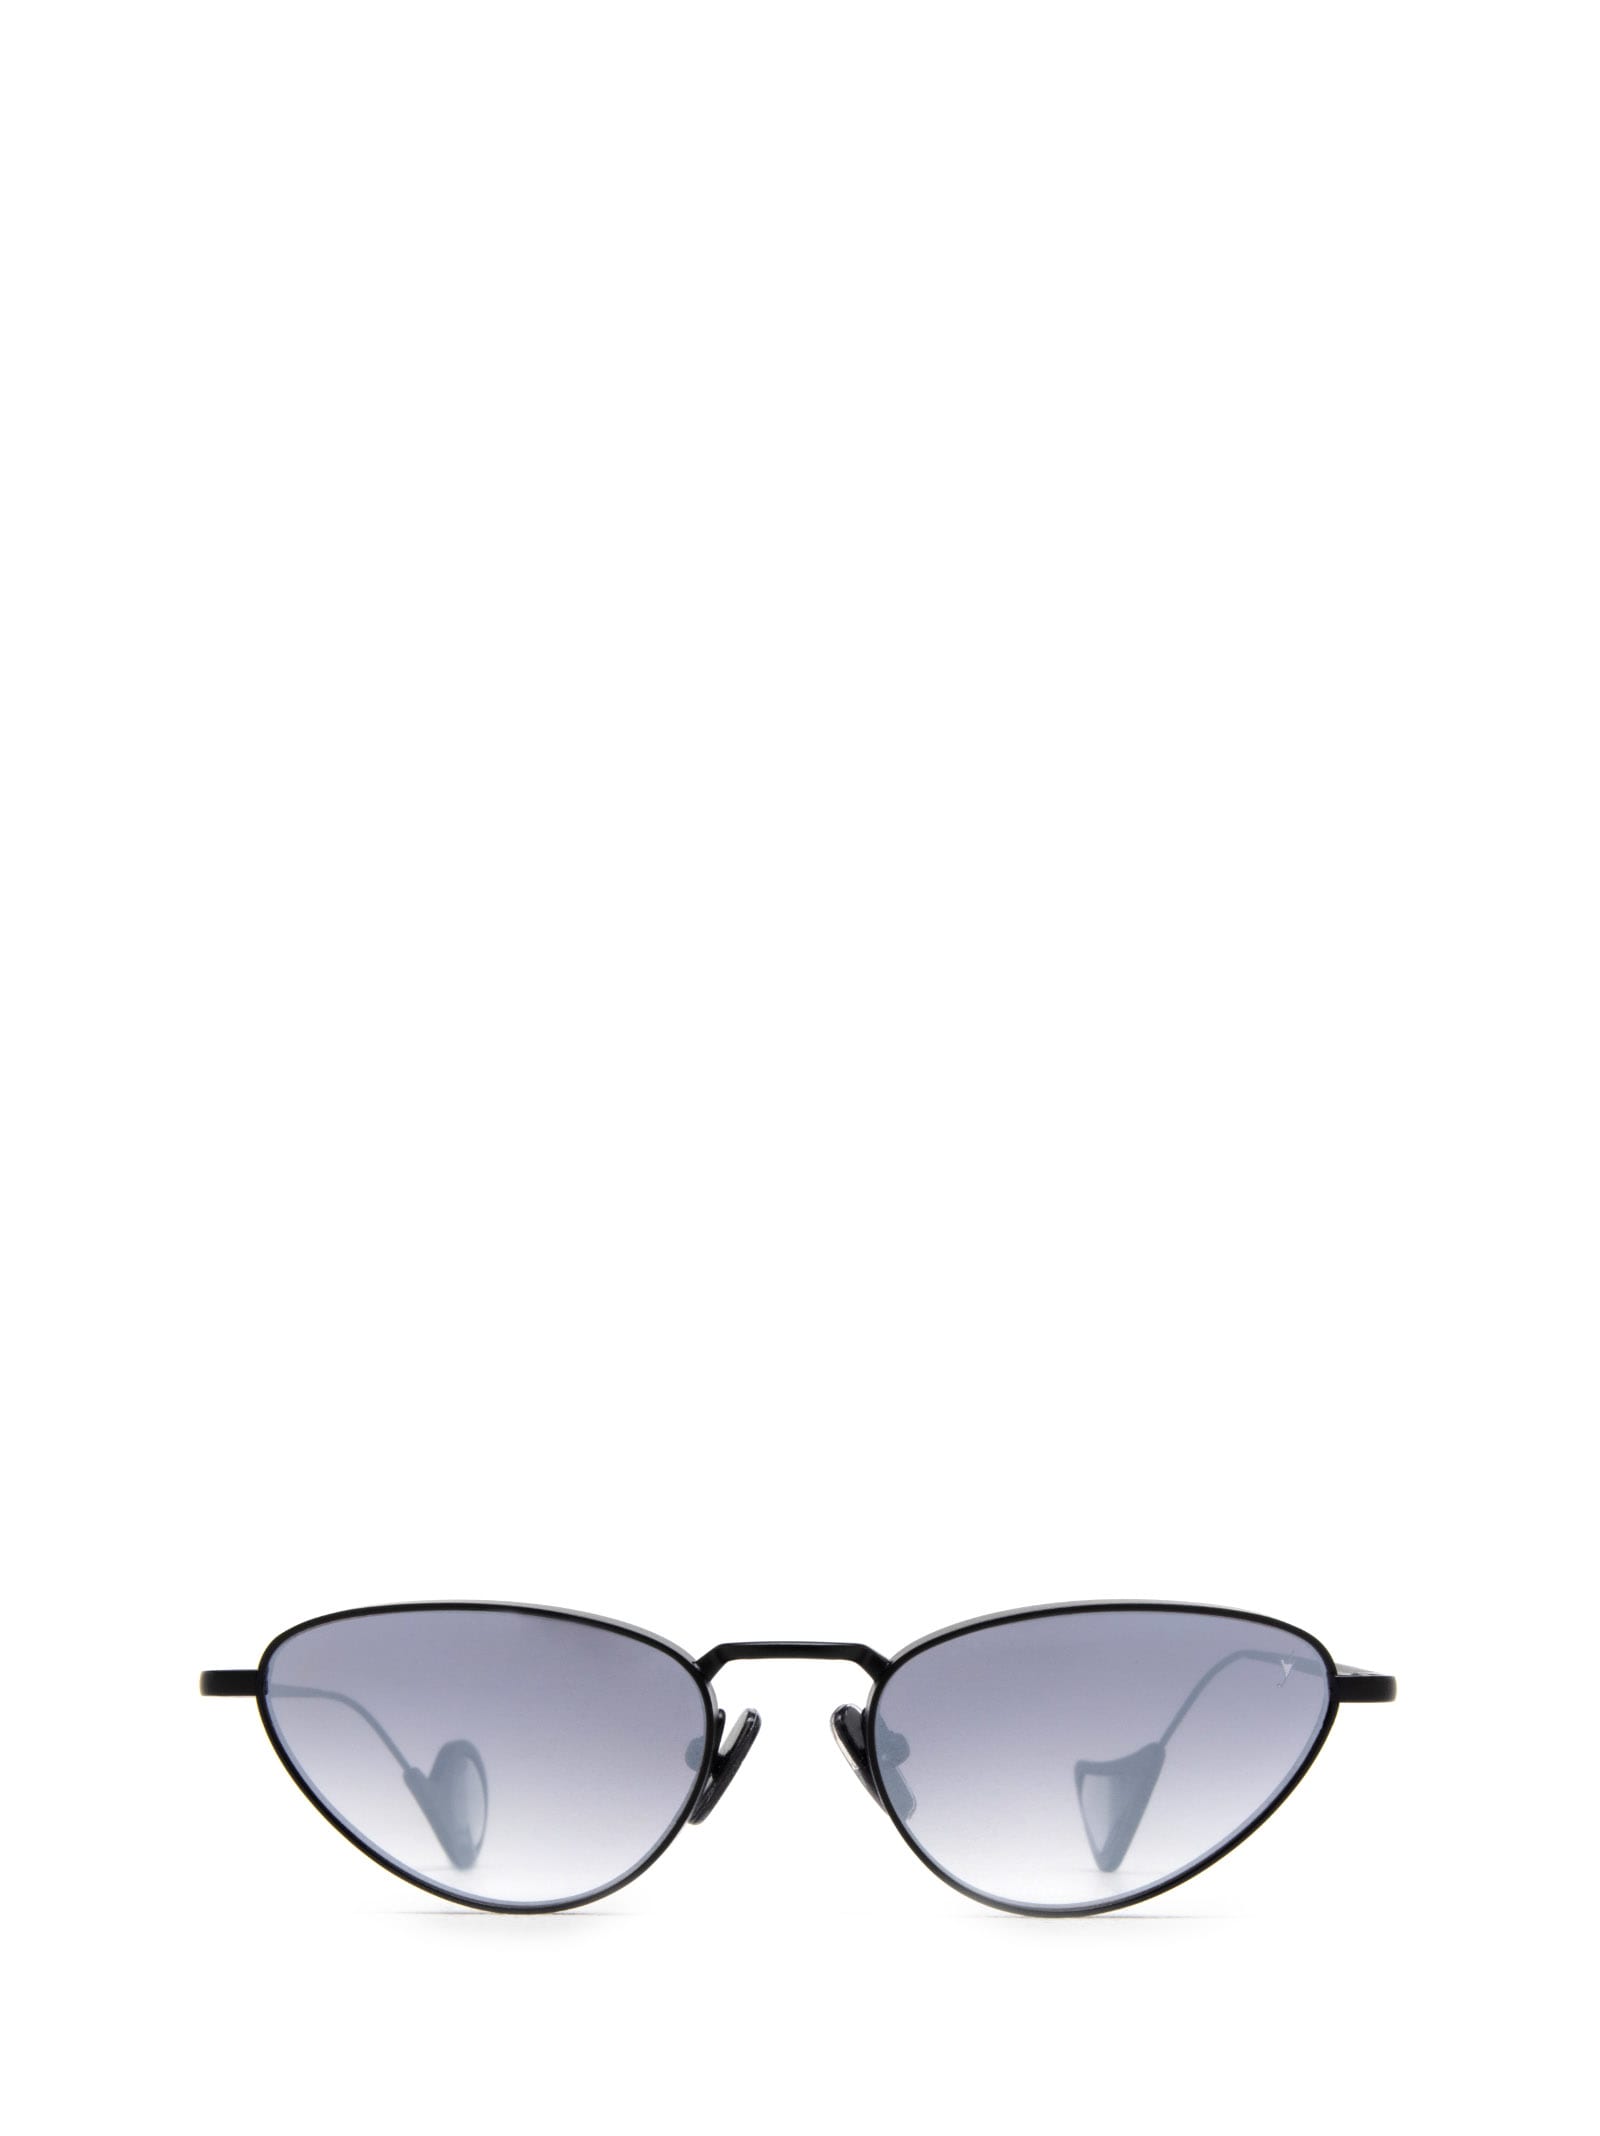 Alameda Black Matt Sunglasses